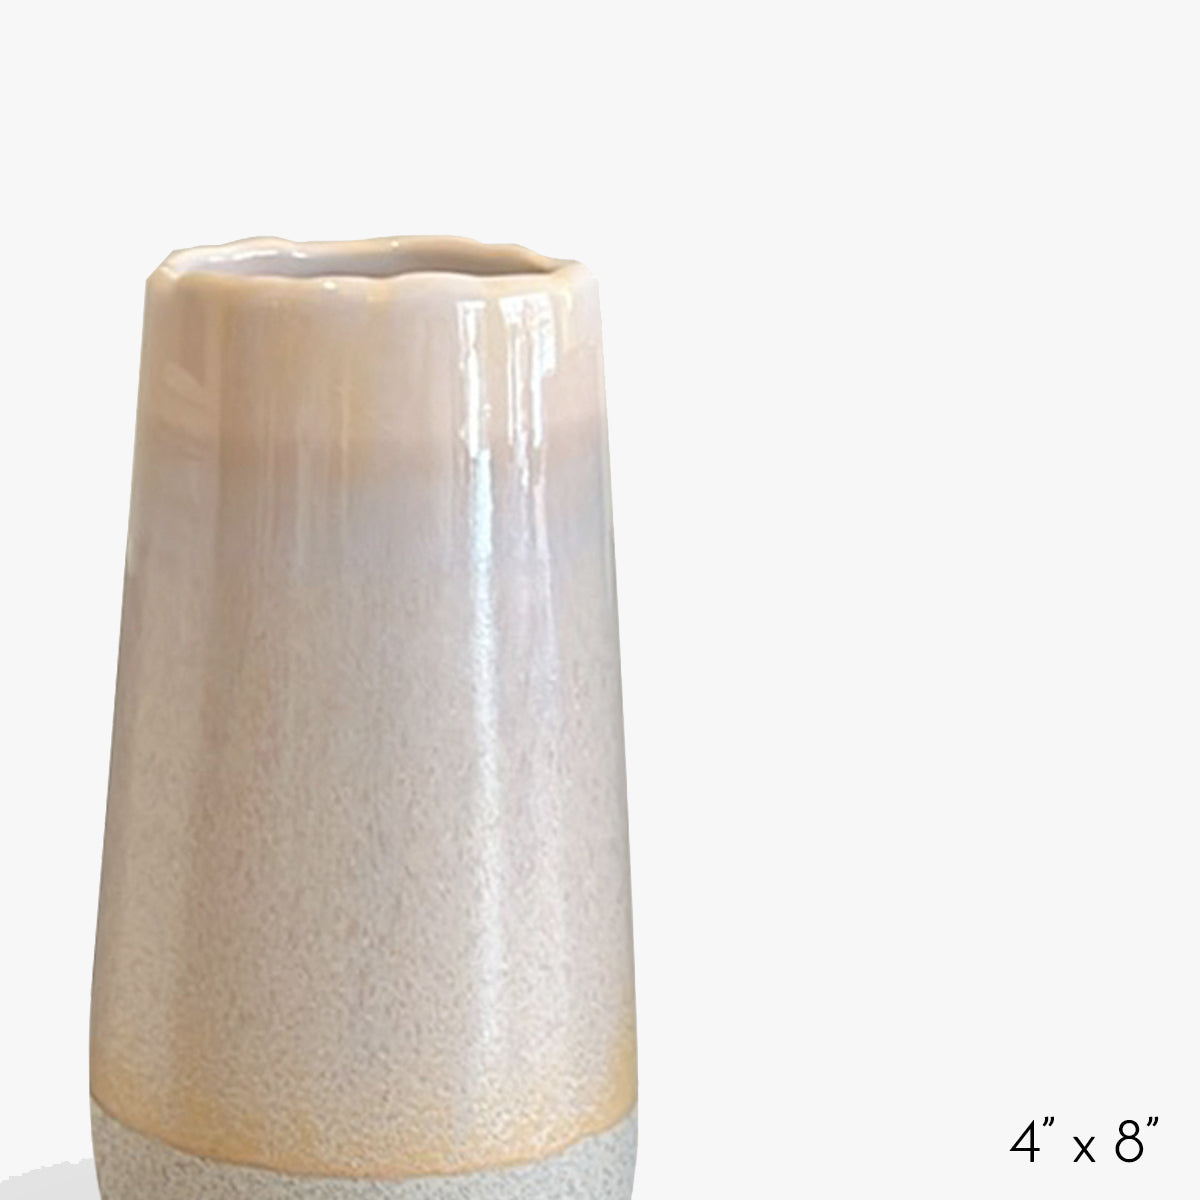 Add-on Stone Vase (Packed Separately)